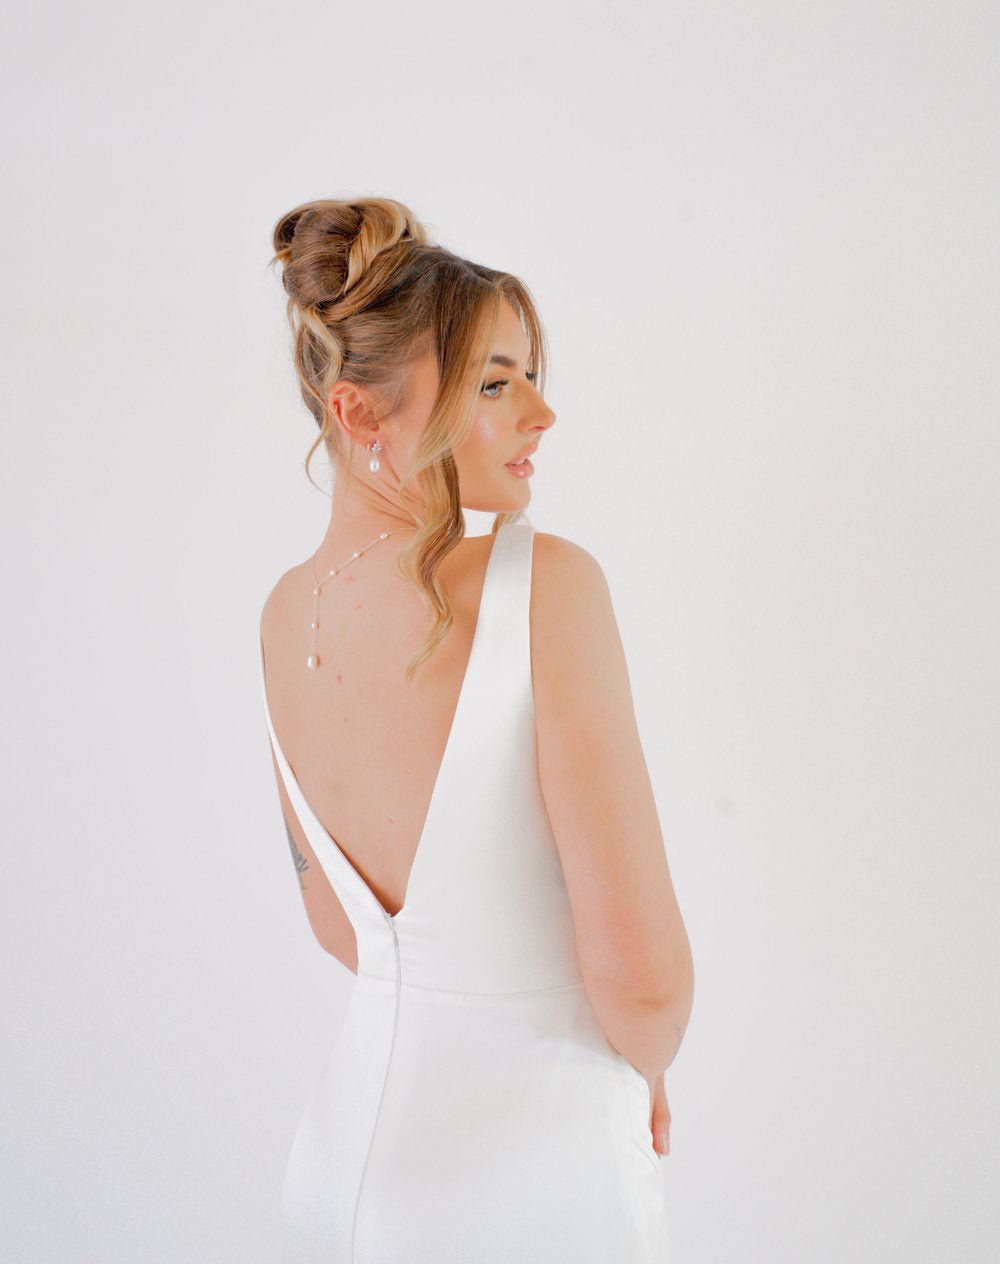 Luxurious Silky Satin Bridal Gown with Low V-Neckline Plus Size - EVERLY - WonderlandByLilian